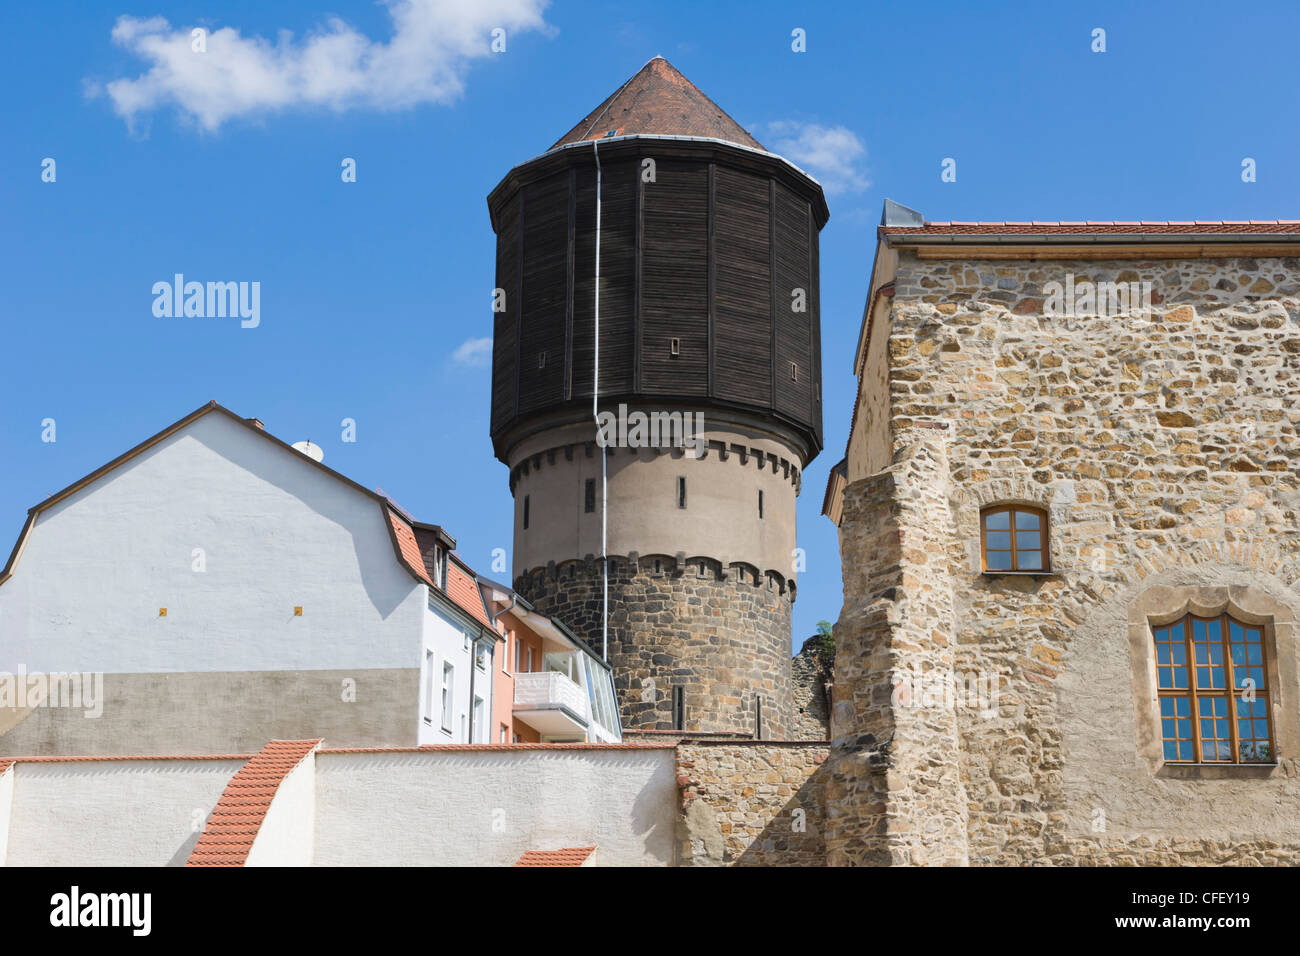 Wasserturm, Water Tower, from Heringstrasse, Bautzen, Germany Stock Photo